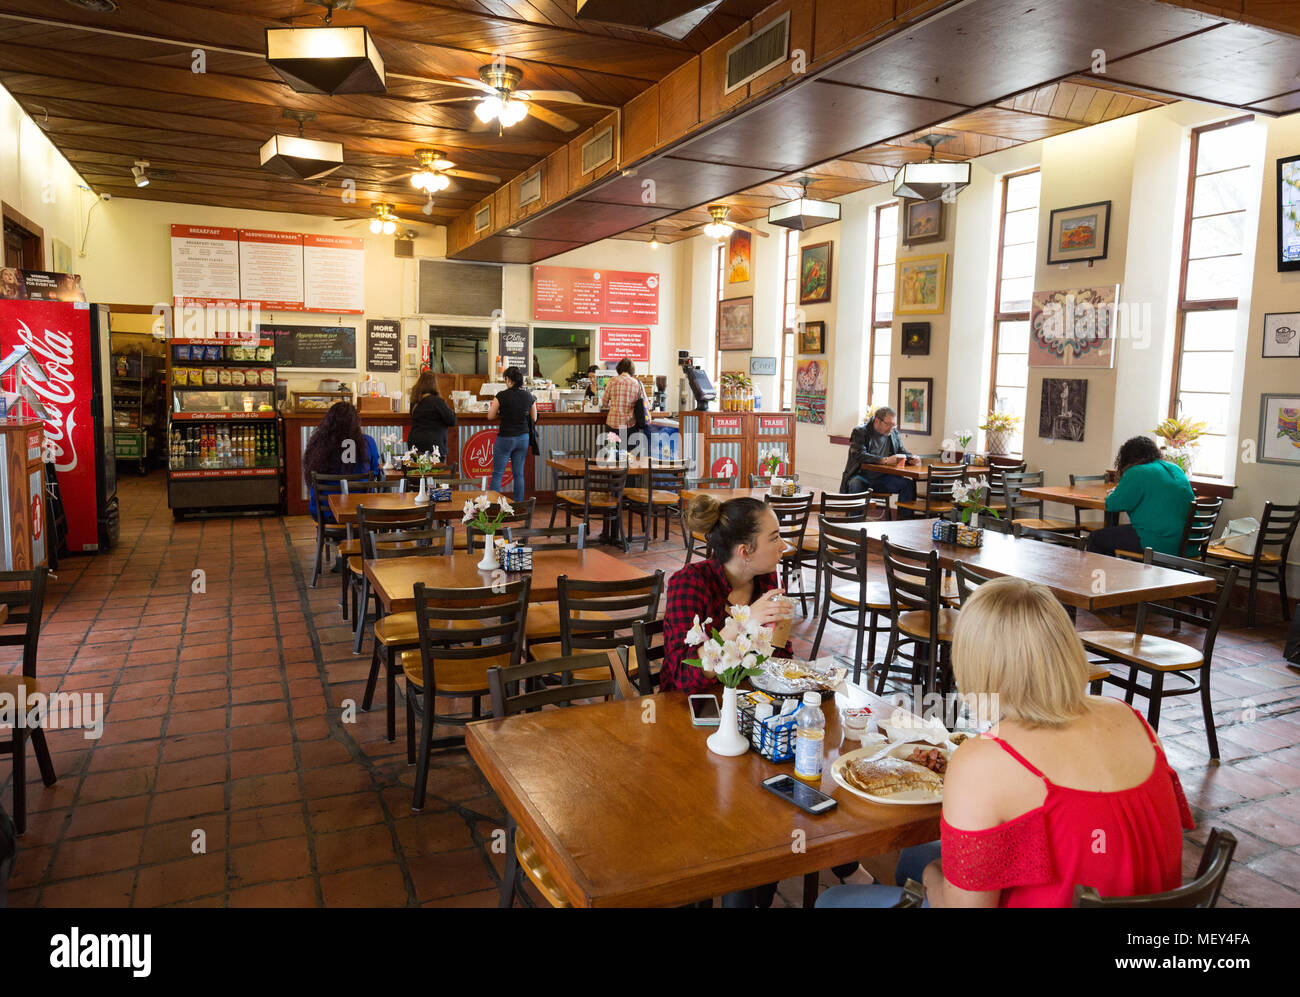 People eating breakfast in a cafe, La Villita district, San Antonio Texas  USA Stock Photo - Alamy